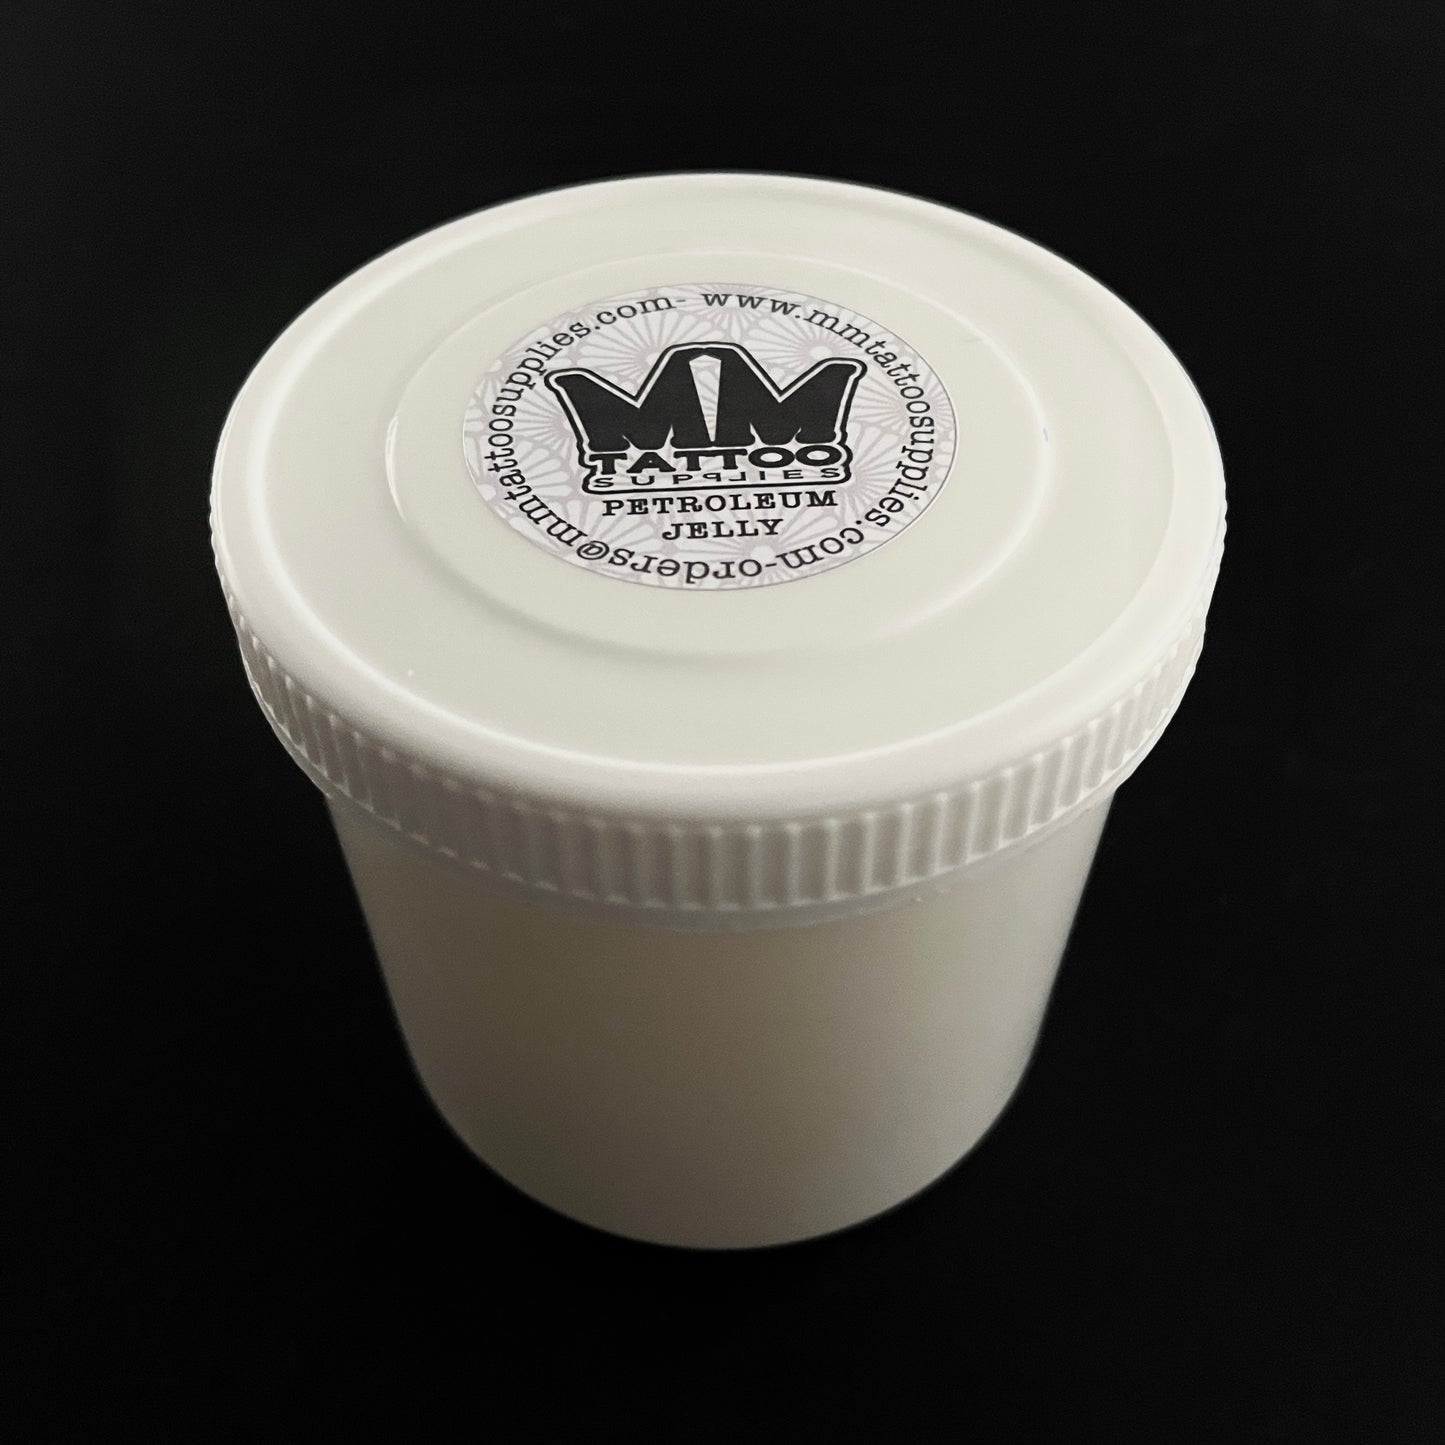 White Prtroleum Jelly 500g - mmtattoo supplies